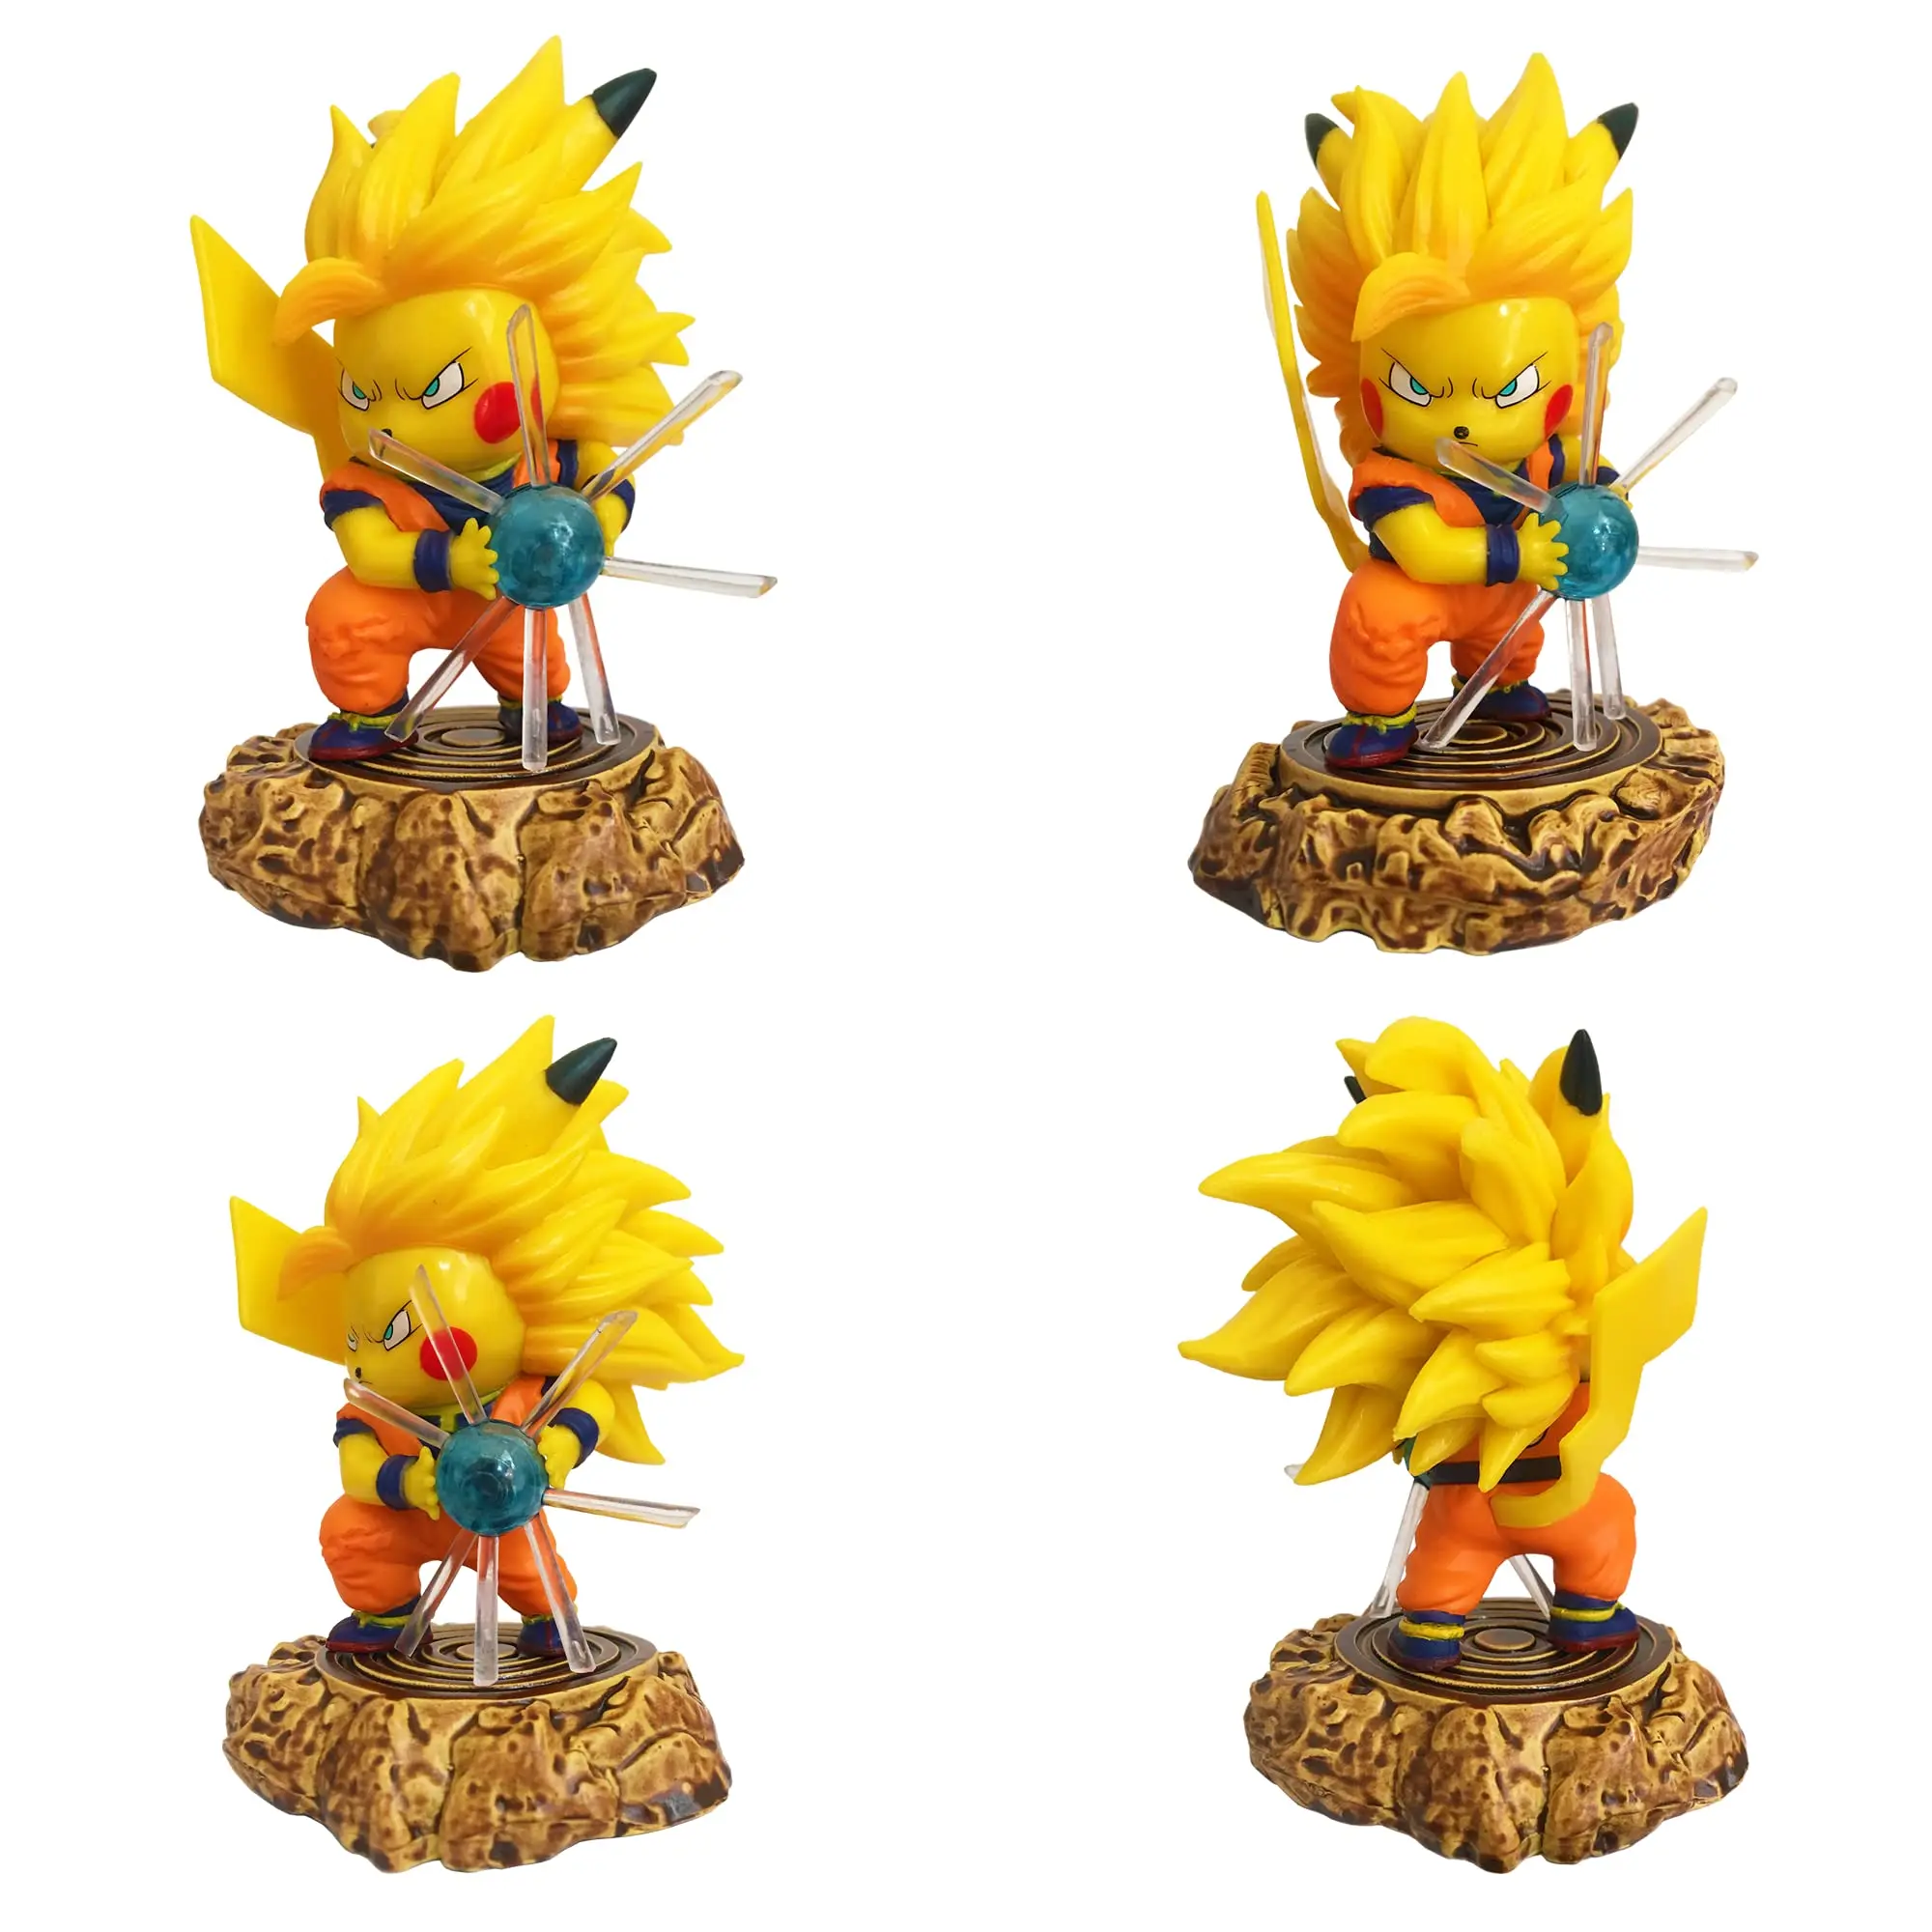 

10cm PVC Pokemon Pikachu Anime Figure Cosplay Dragon Ball Son Goku Kawaii Action Figurine Toys for Children Collection Statue